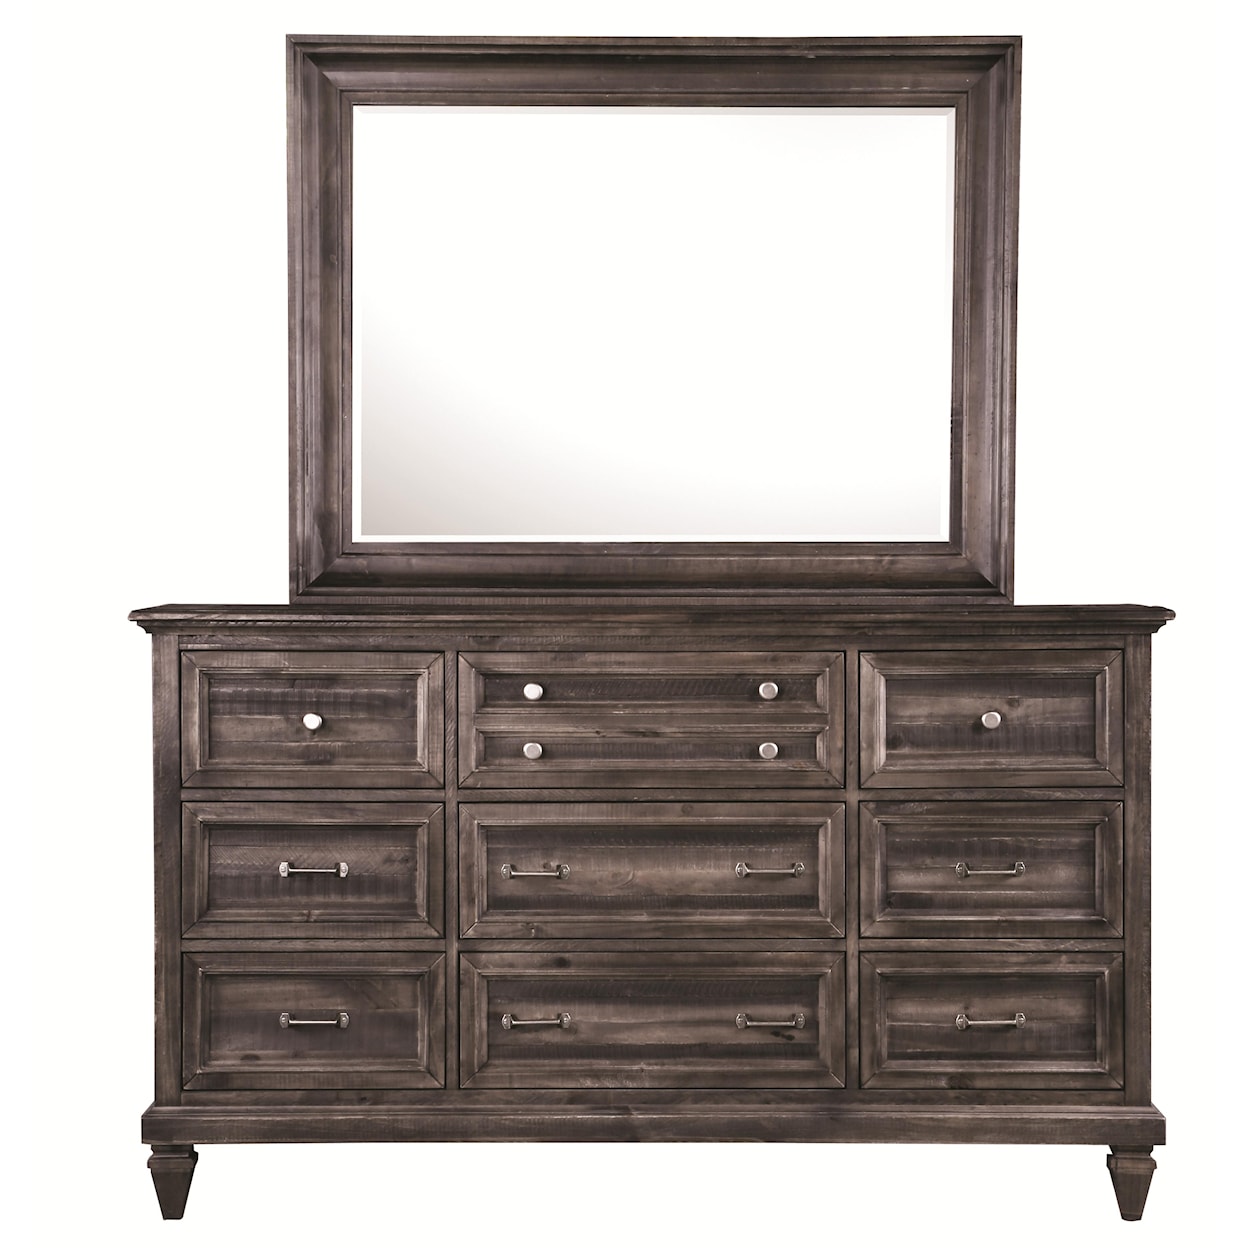 Magnussen Home Calistoga Bedroom Dresser and Mirror Set